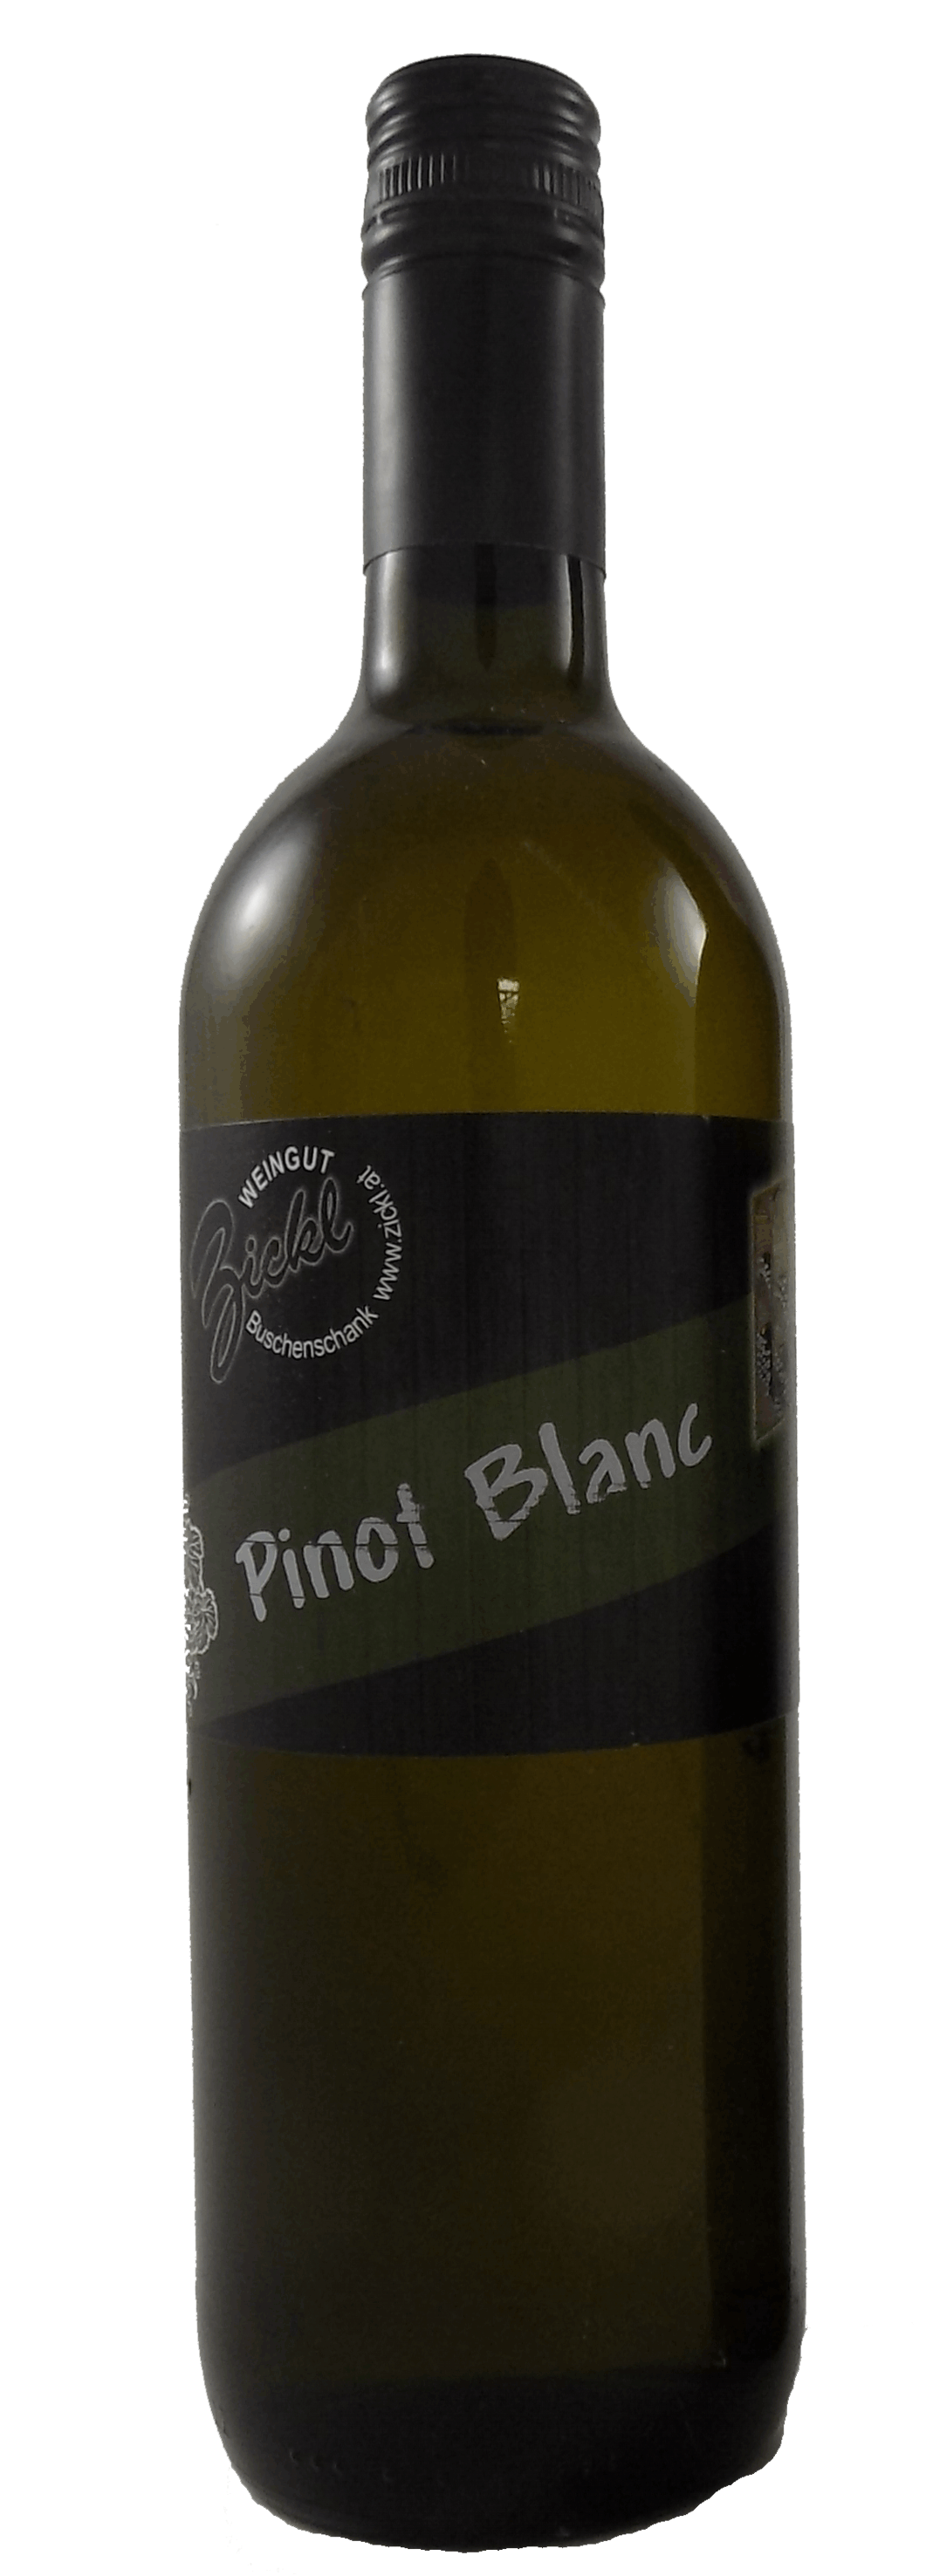 Pinot Blanc 2019 aus dem Weingut Zickl